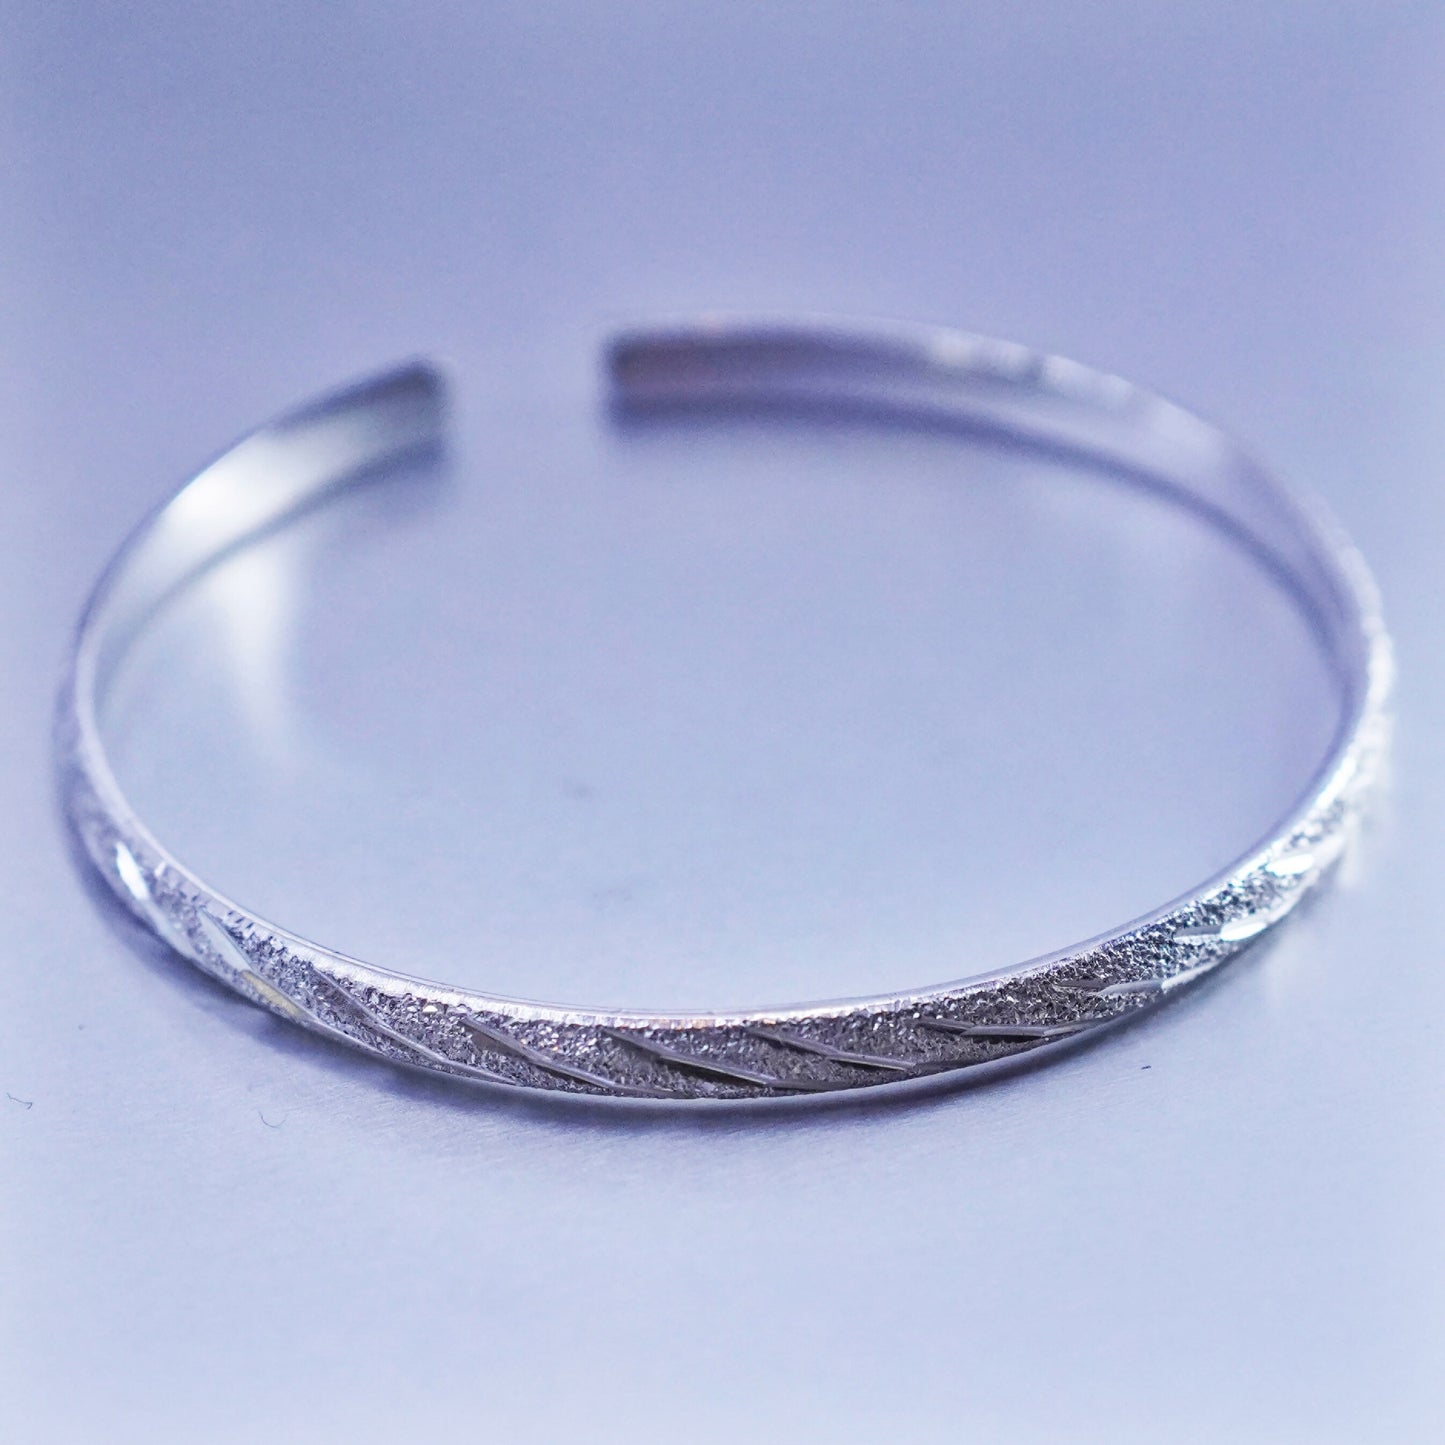 6.75”, 999 fine silver handmade bracelet, textured glittering stackable cuff